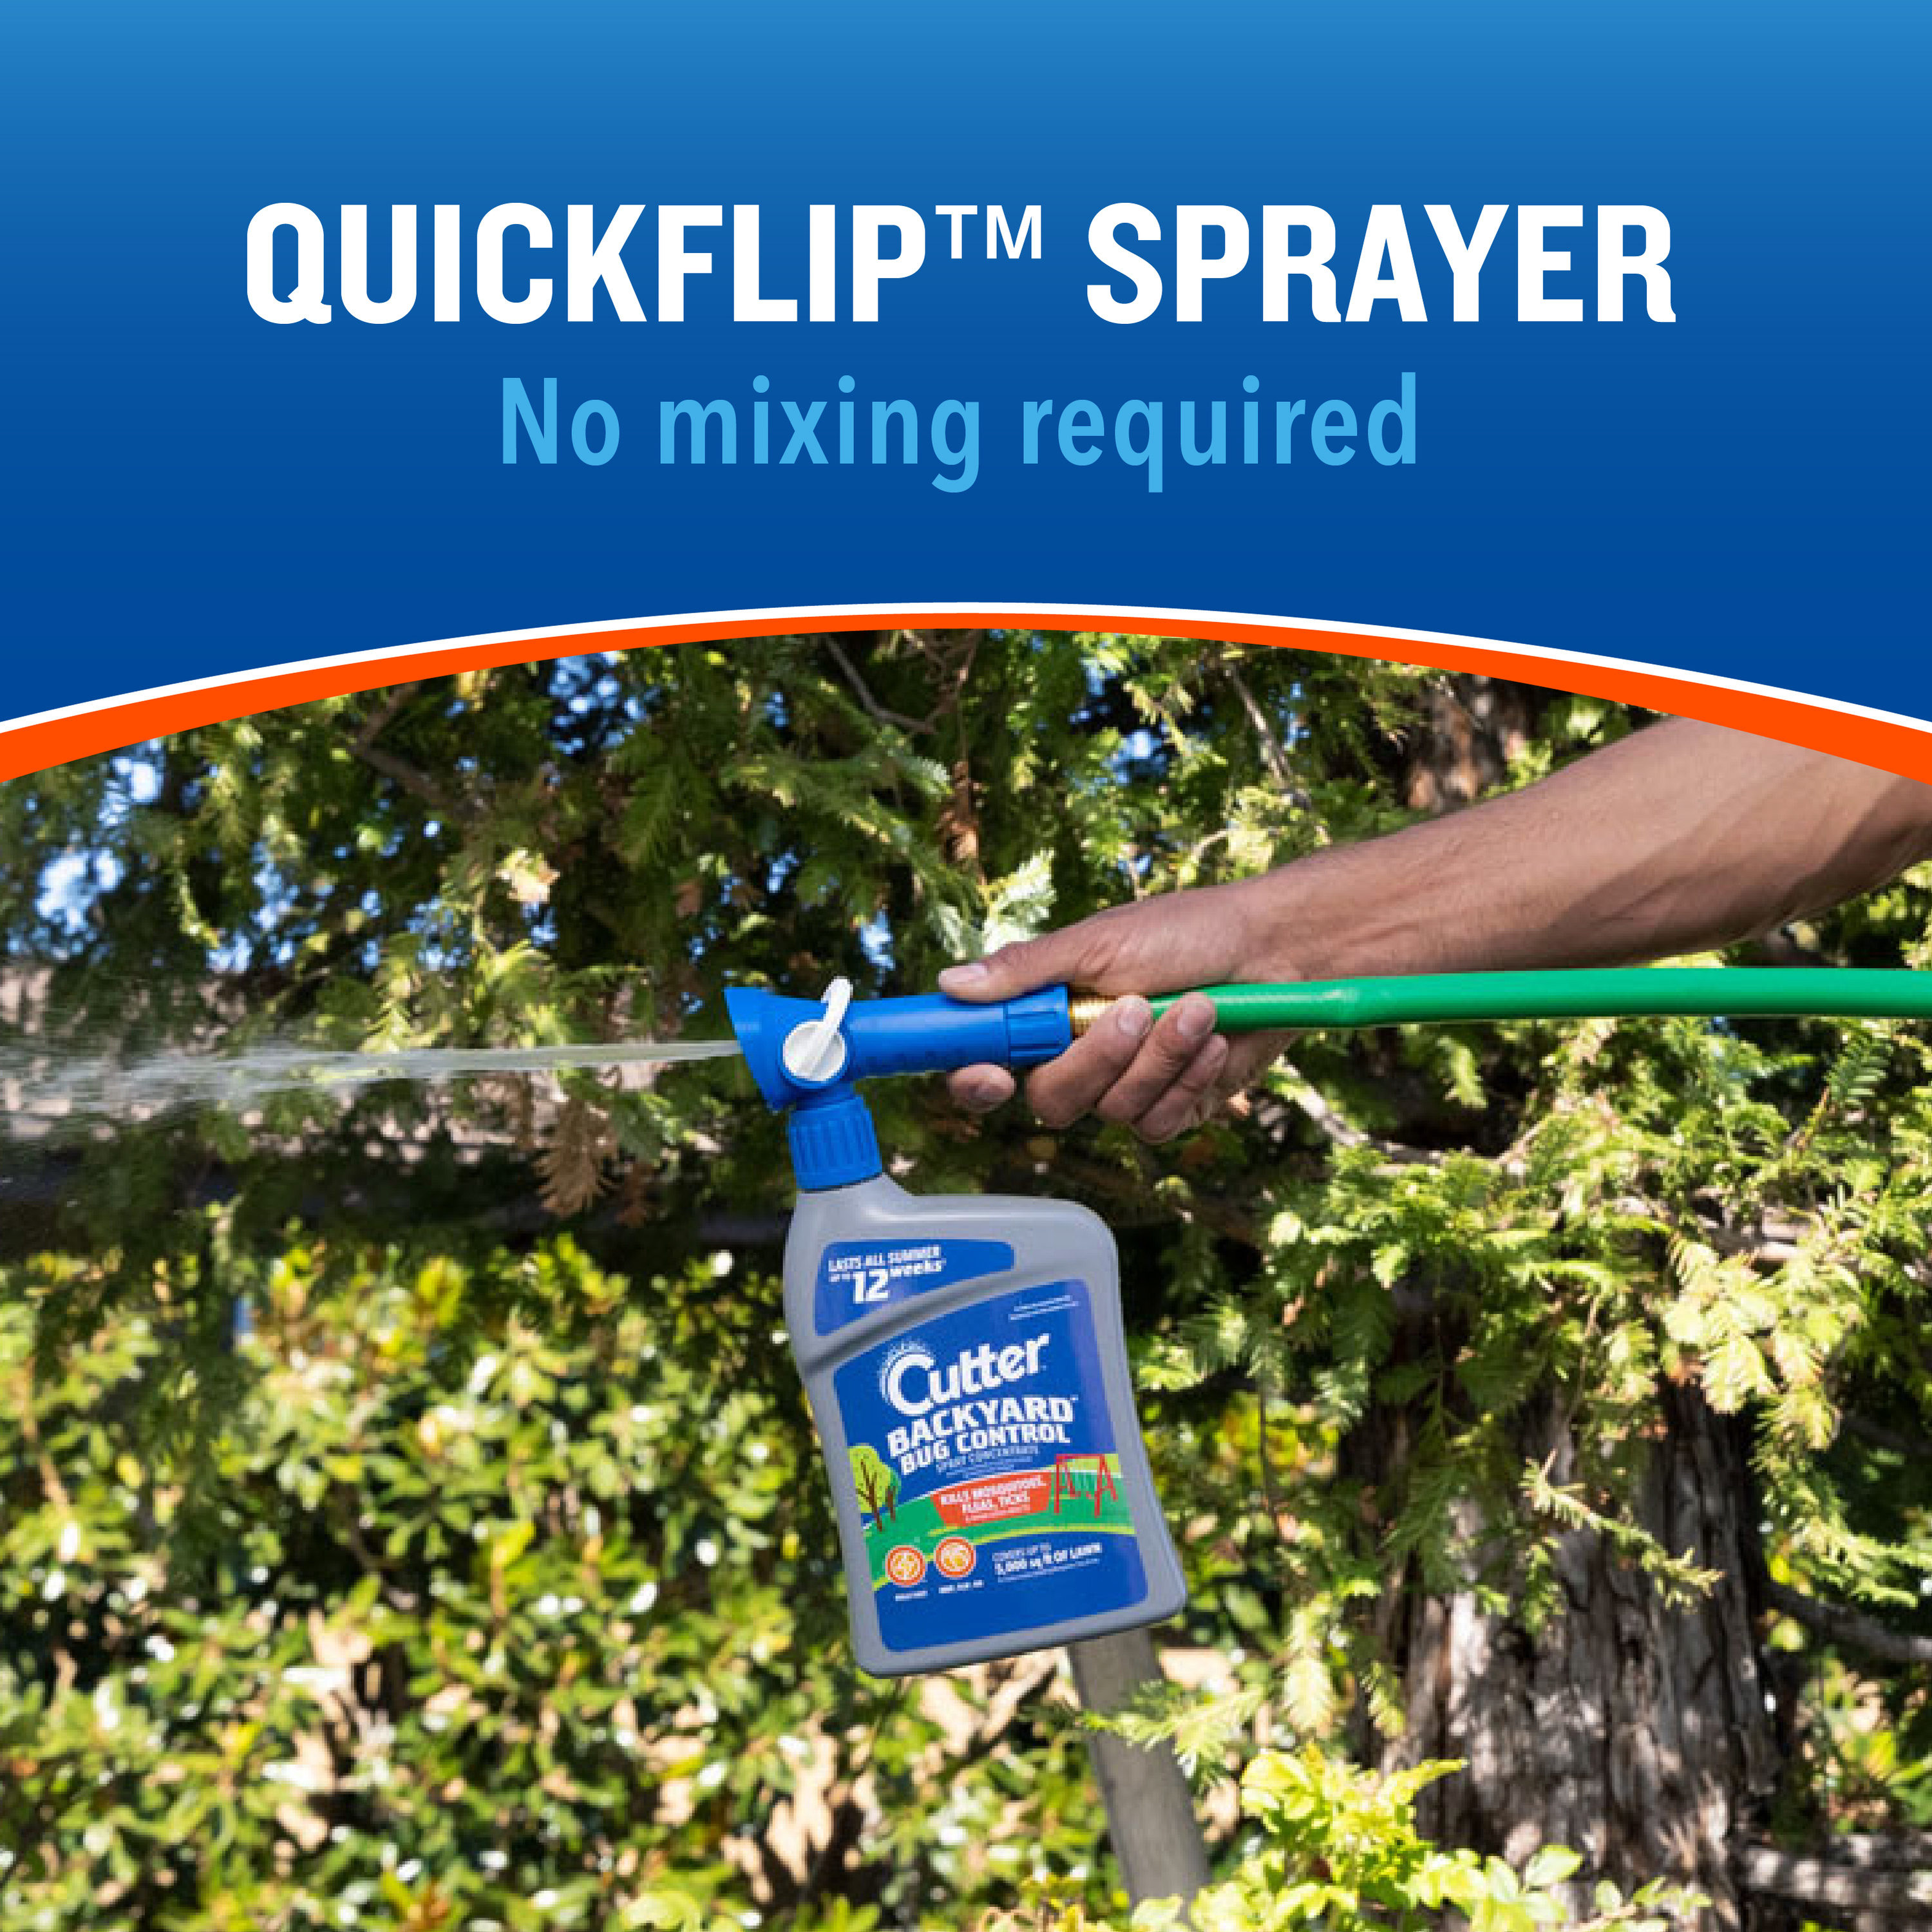 Cutter Mosquito Backyard Bug Control Bug Spray 32-fl oz Concentrate ...